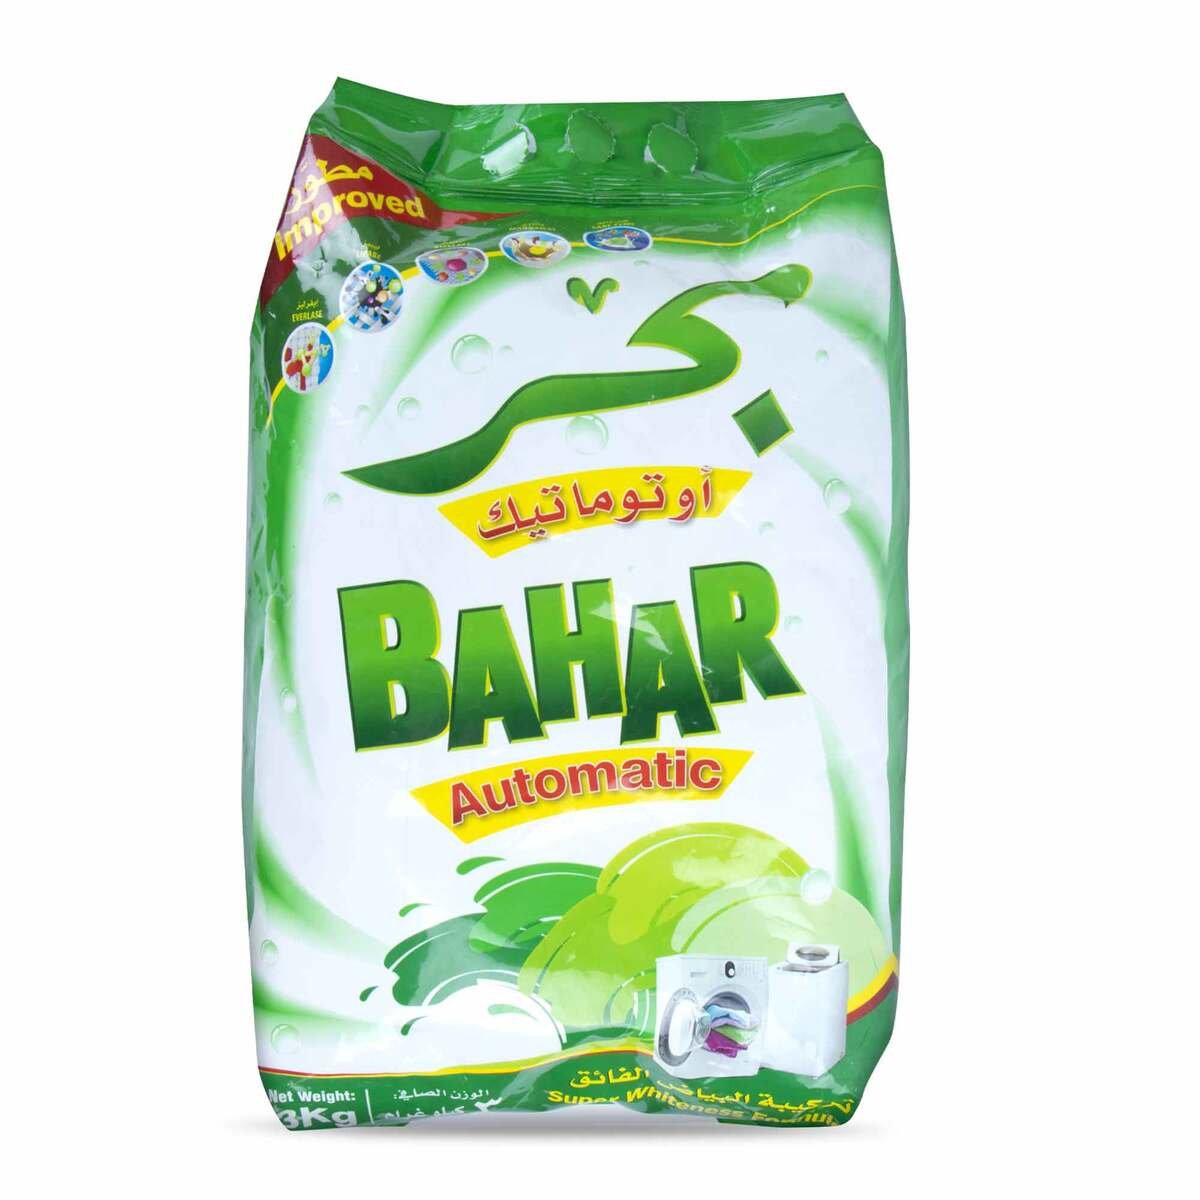 Bahar Automatic Washing Powder Green Front Load  3kg